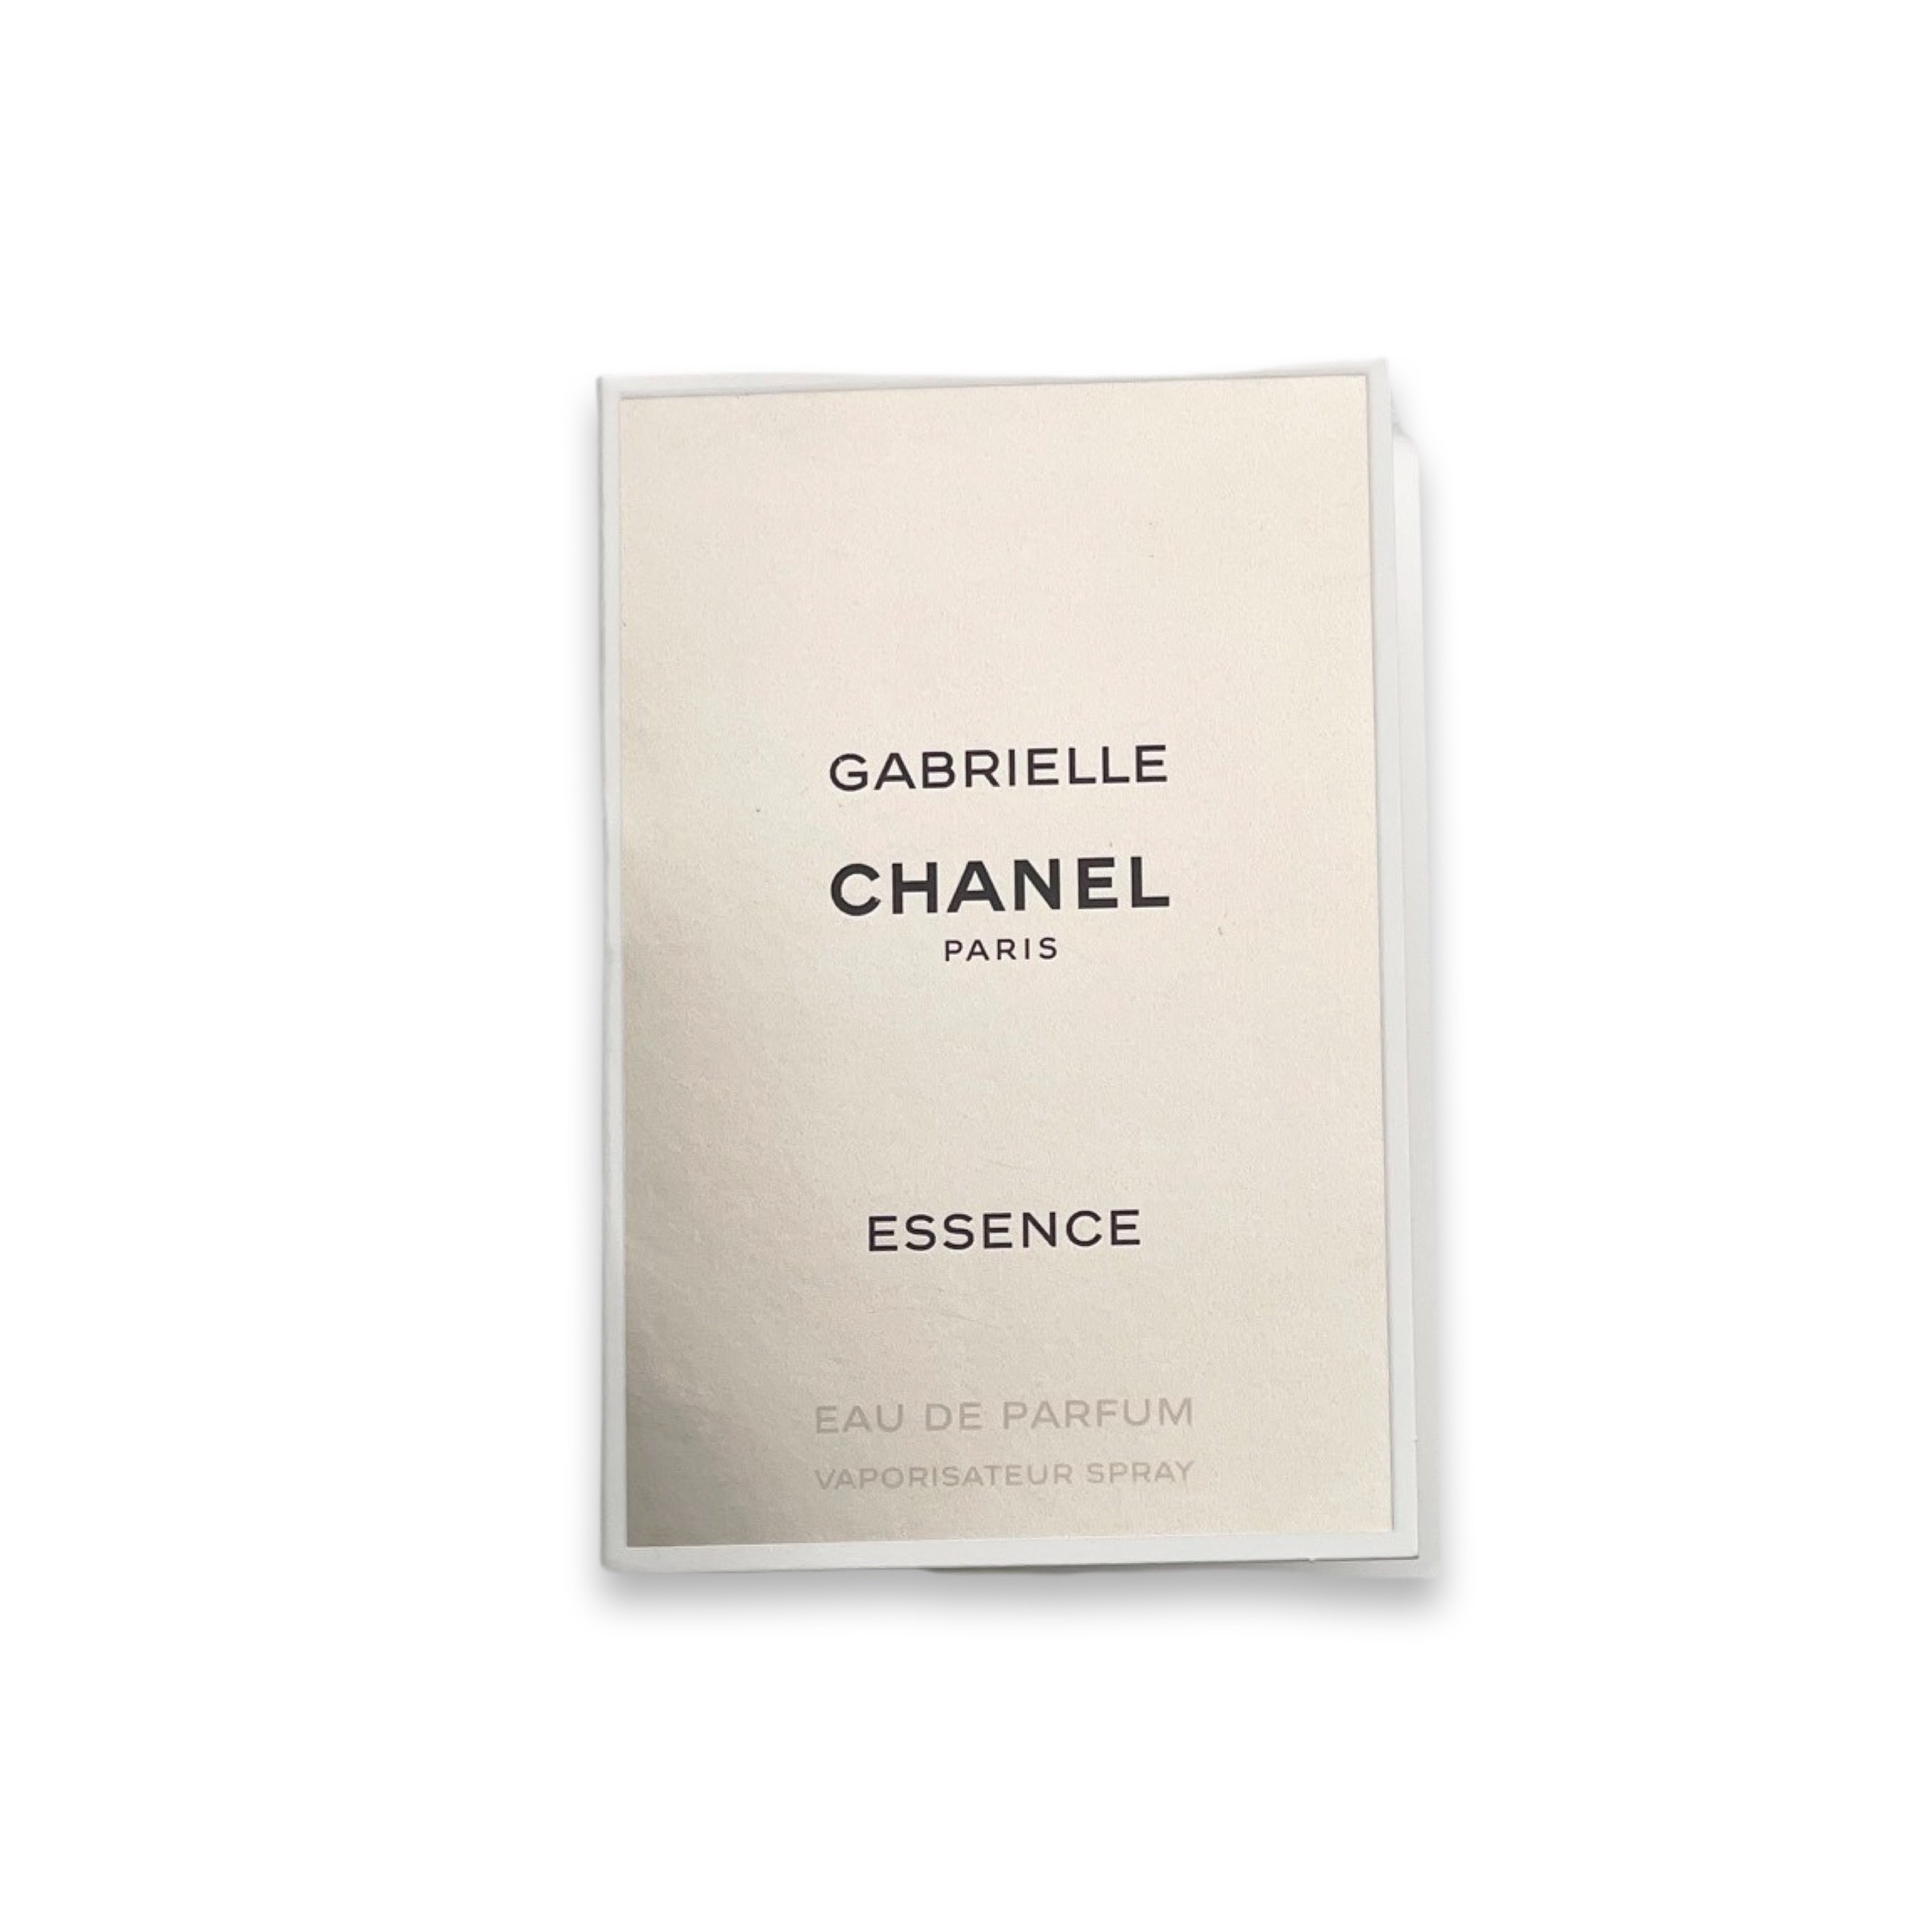 CHANEL Gabrielle Essence EDP / Sample (1.5ml)